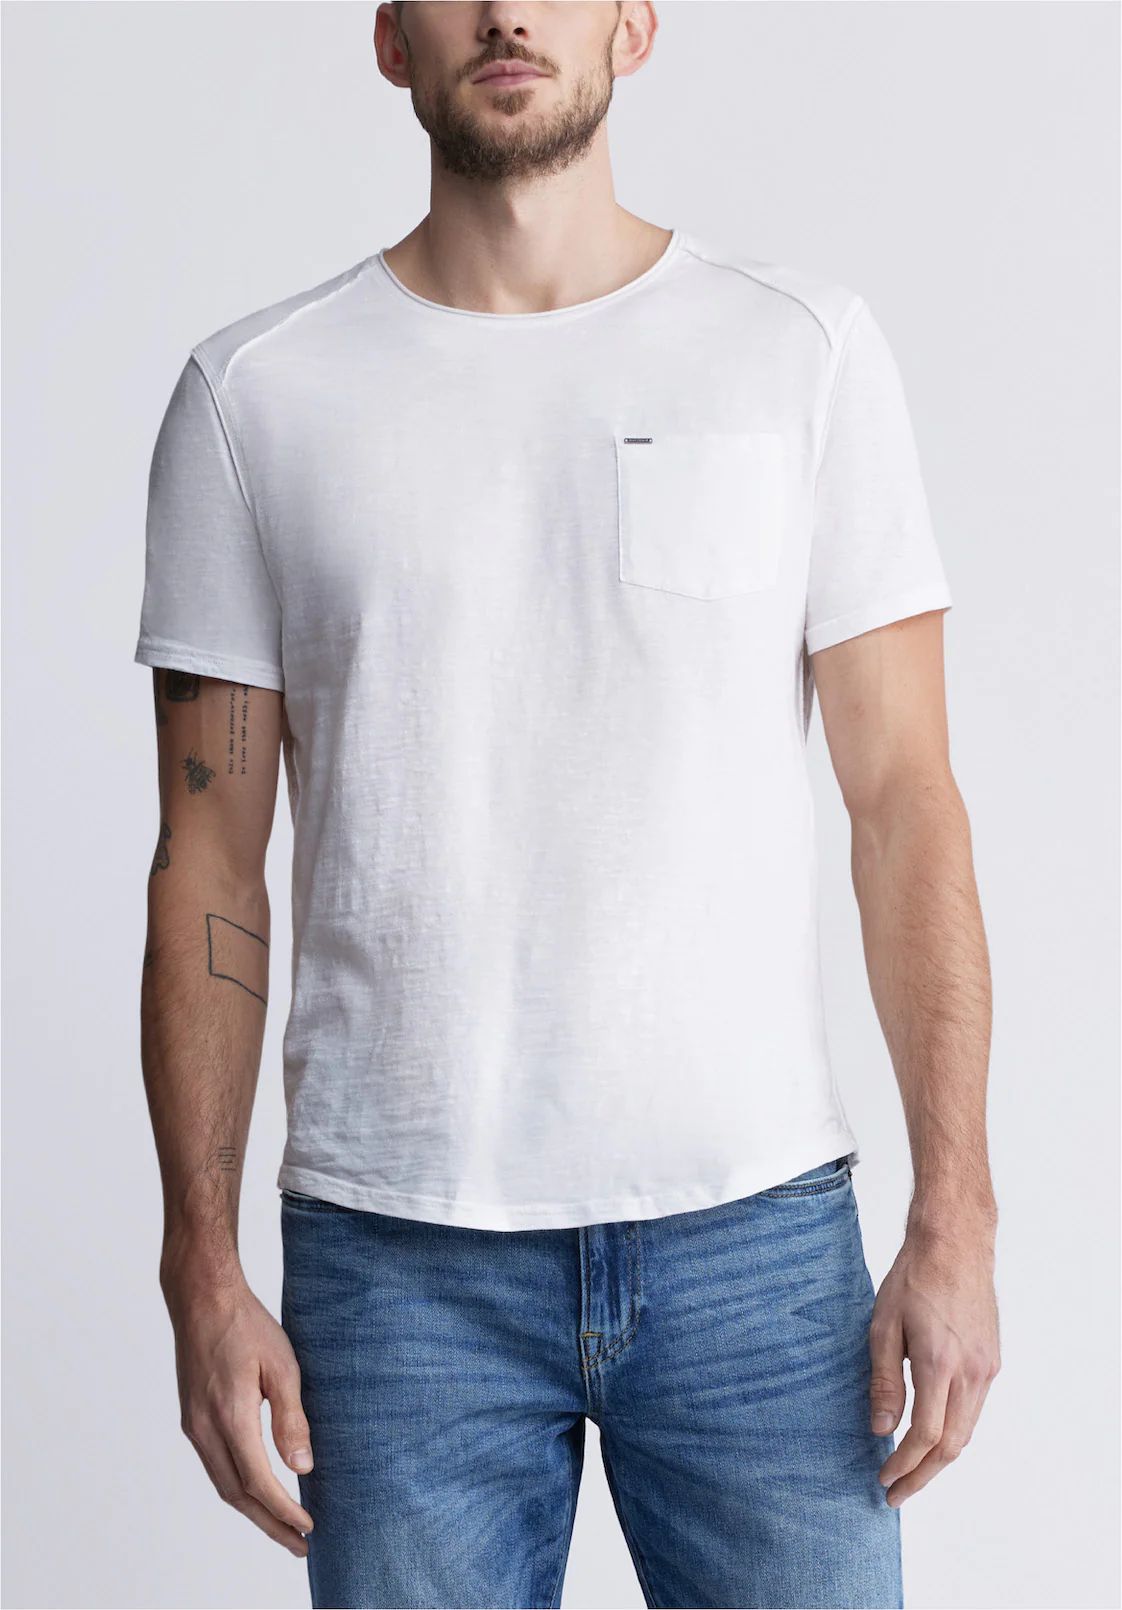 Kamizo Men's Pocket T-shirt in White - BM24346 | Buffalo David Bitton